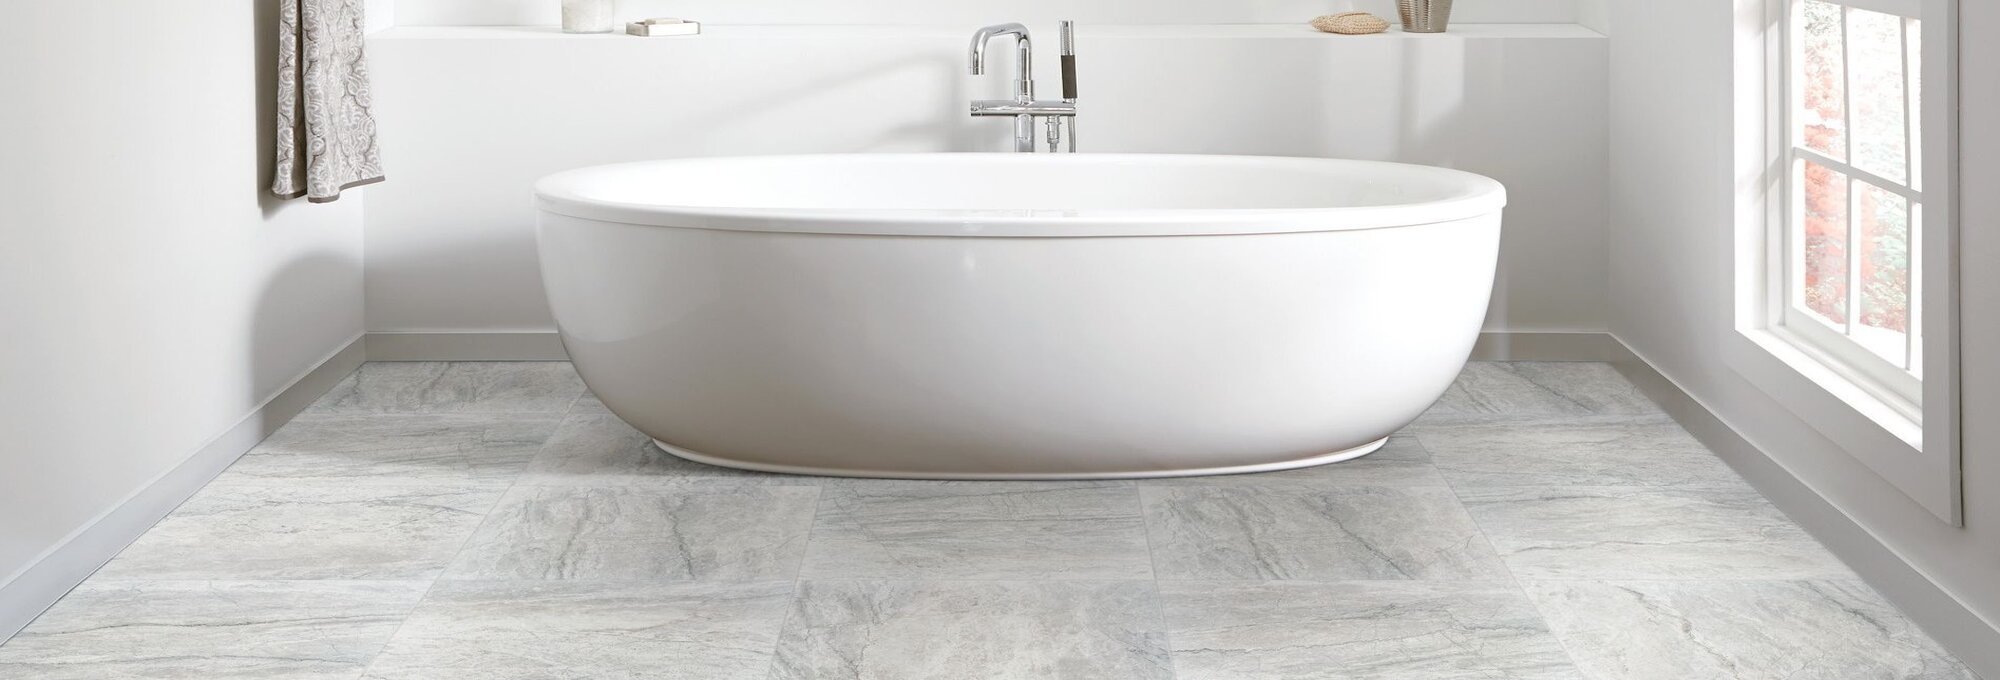 Bath-tube on tile - Andersons New Carpet Design in Fridley